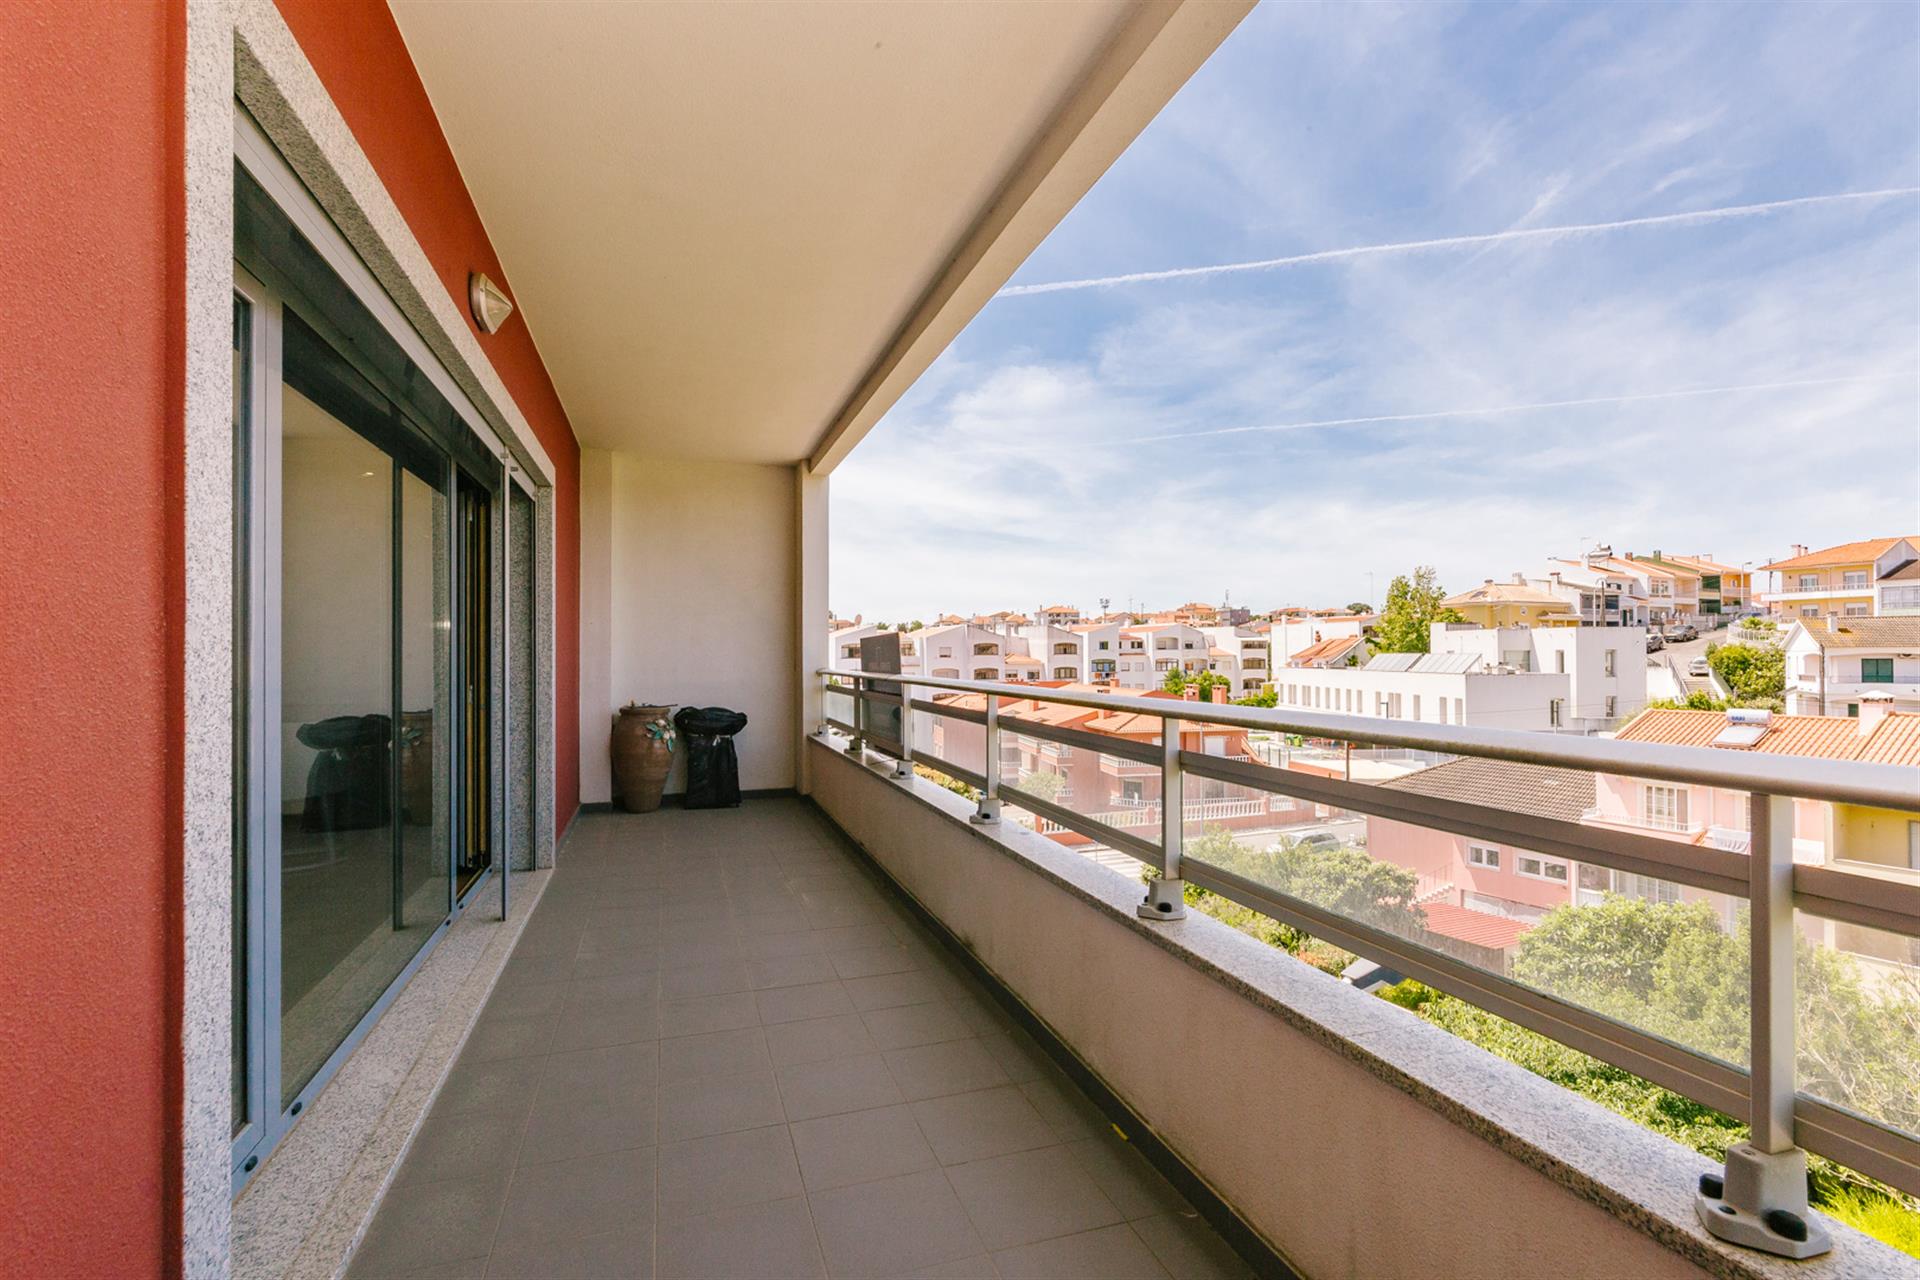 2 bedroom apartment in Estoril - comfort, space and open views 